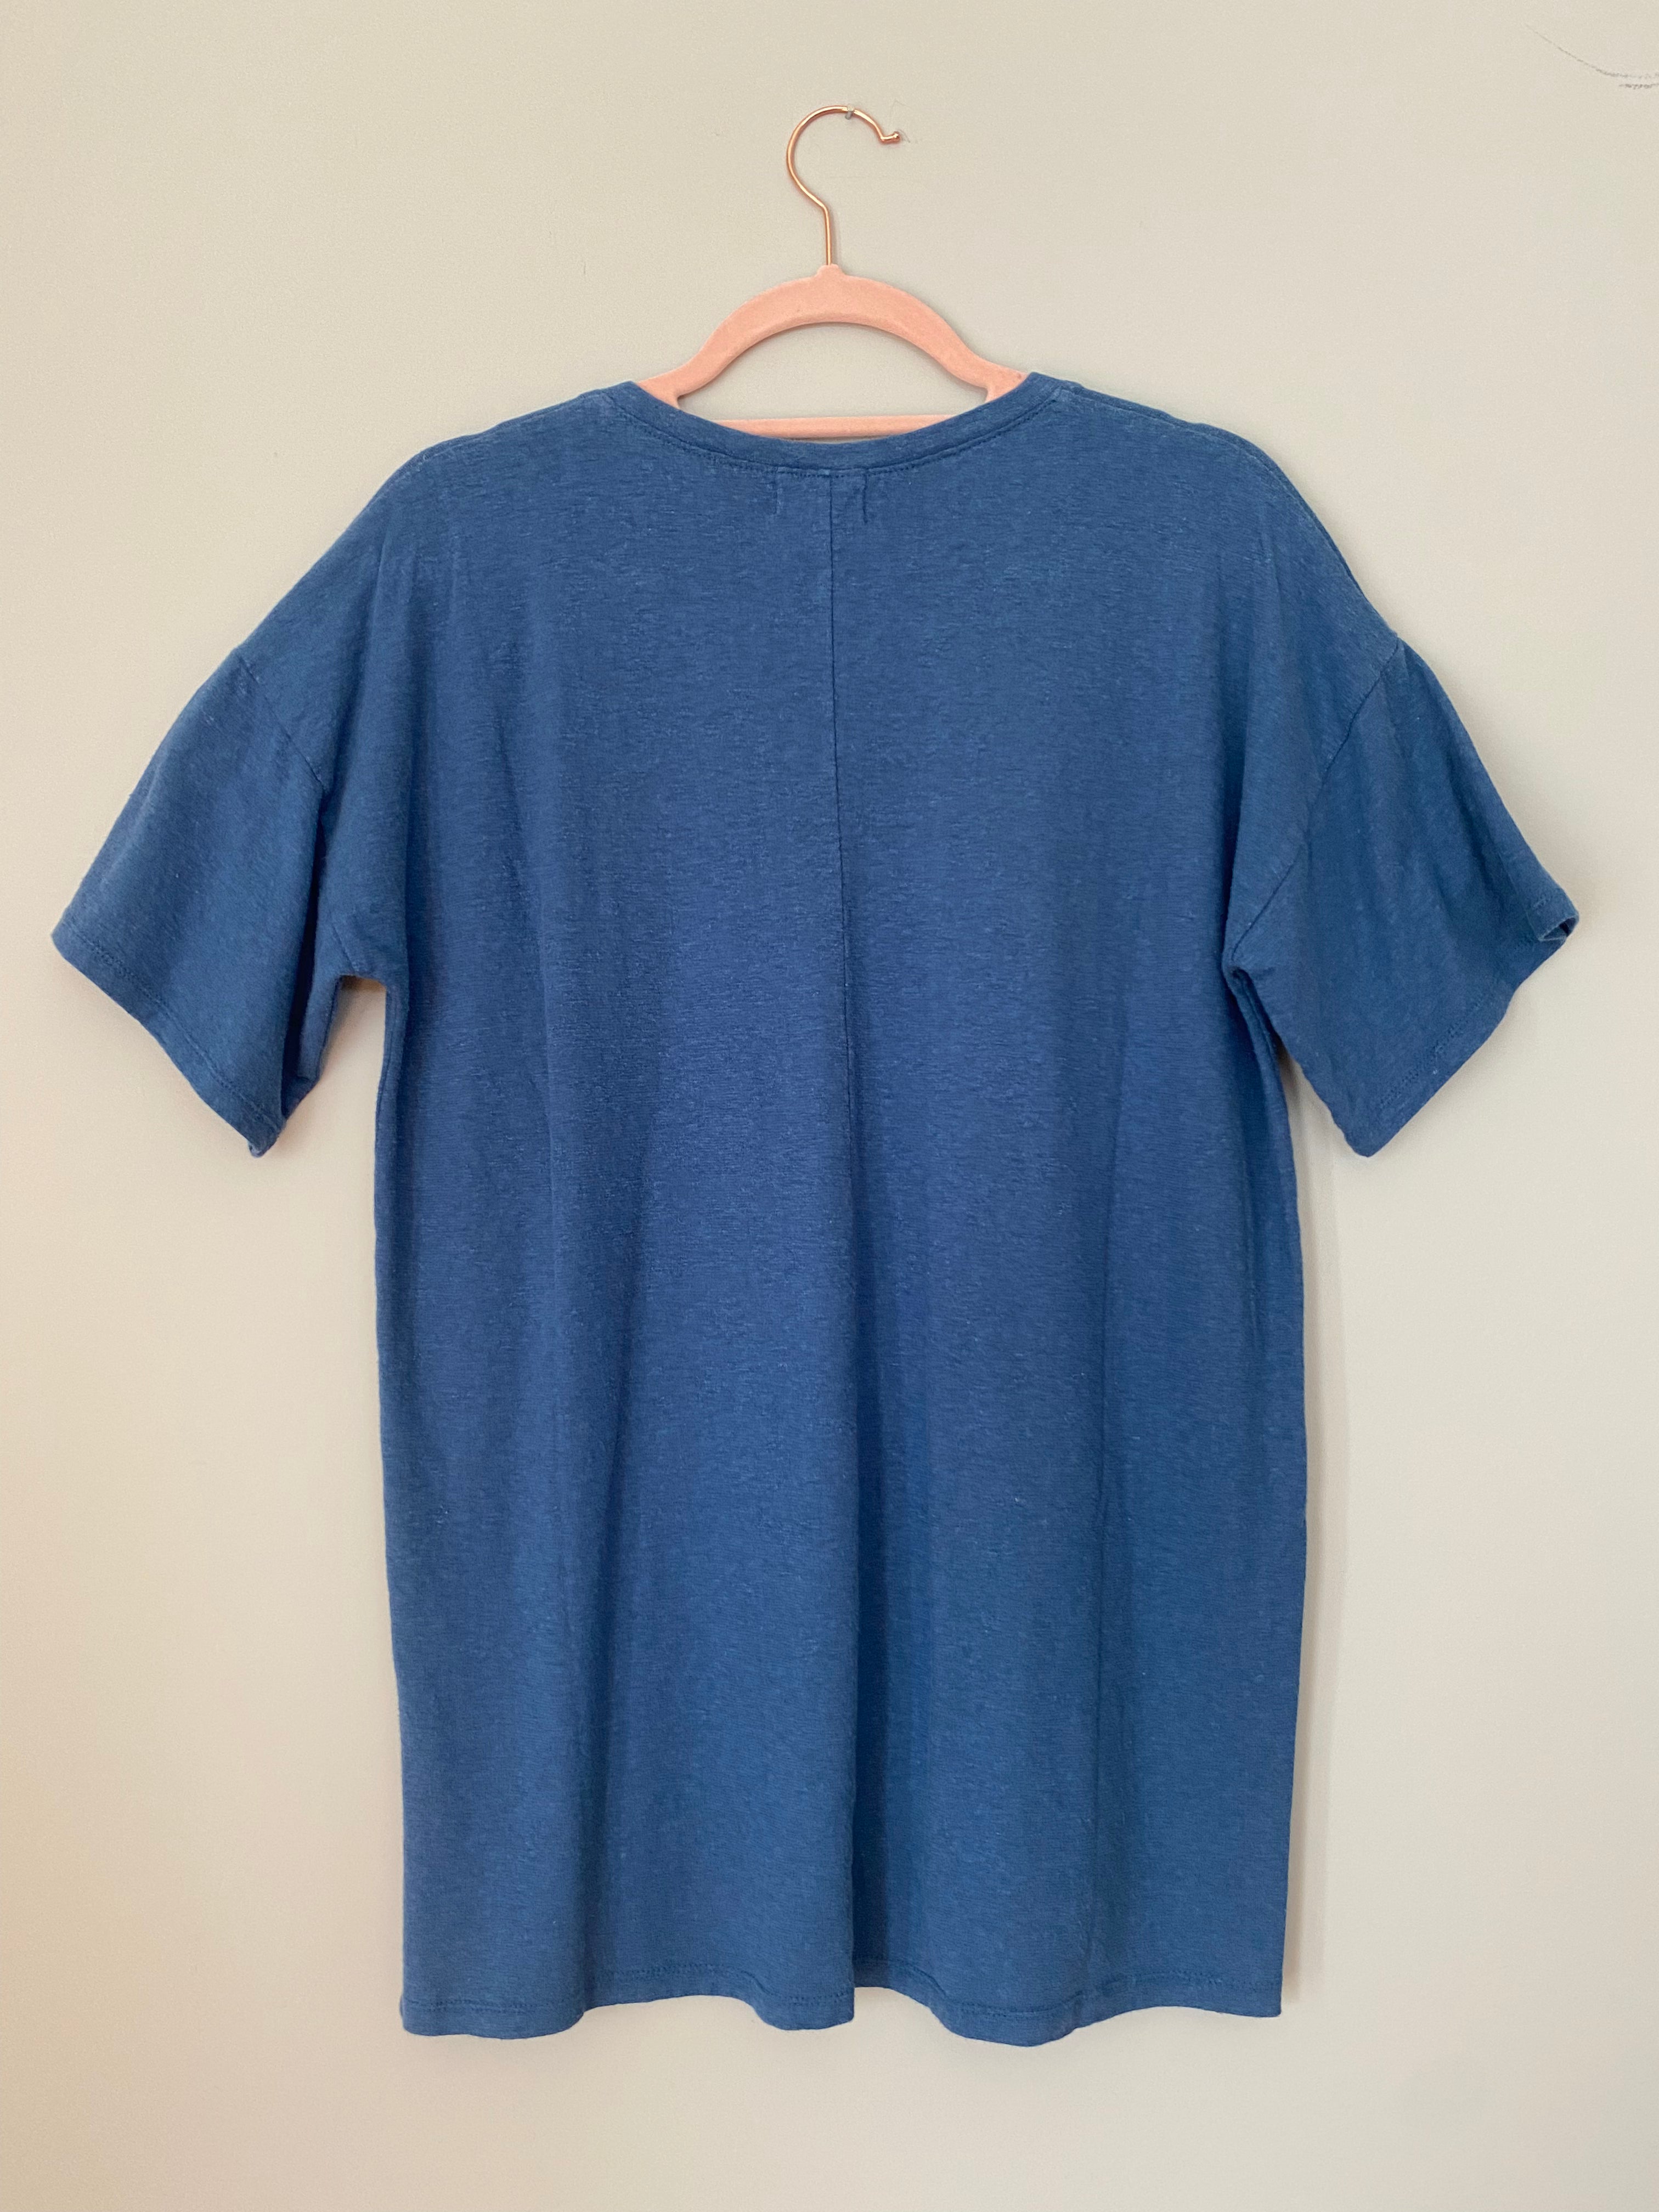 Marketplace, Medium Tall, T Shirt V Neck, Hemp Organic Cotton Jersey, Stellar